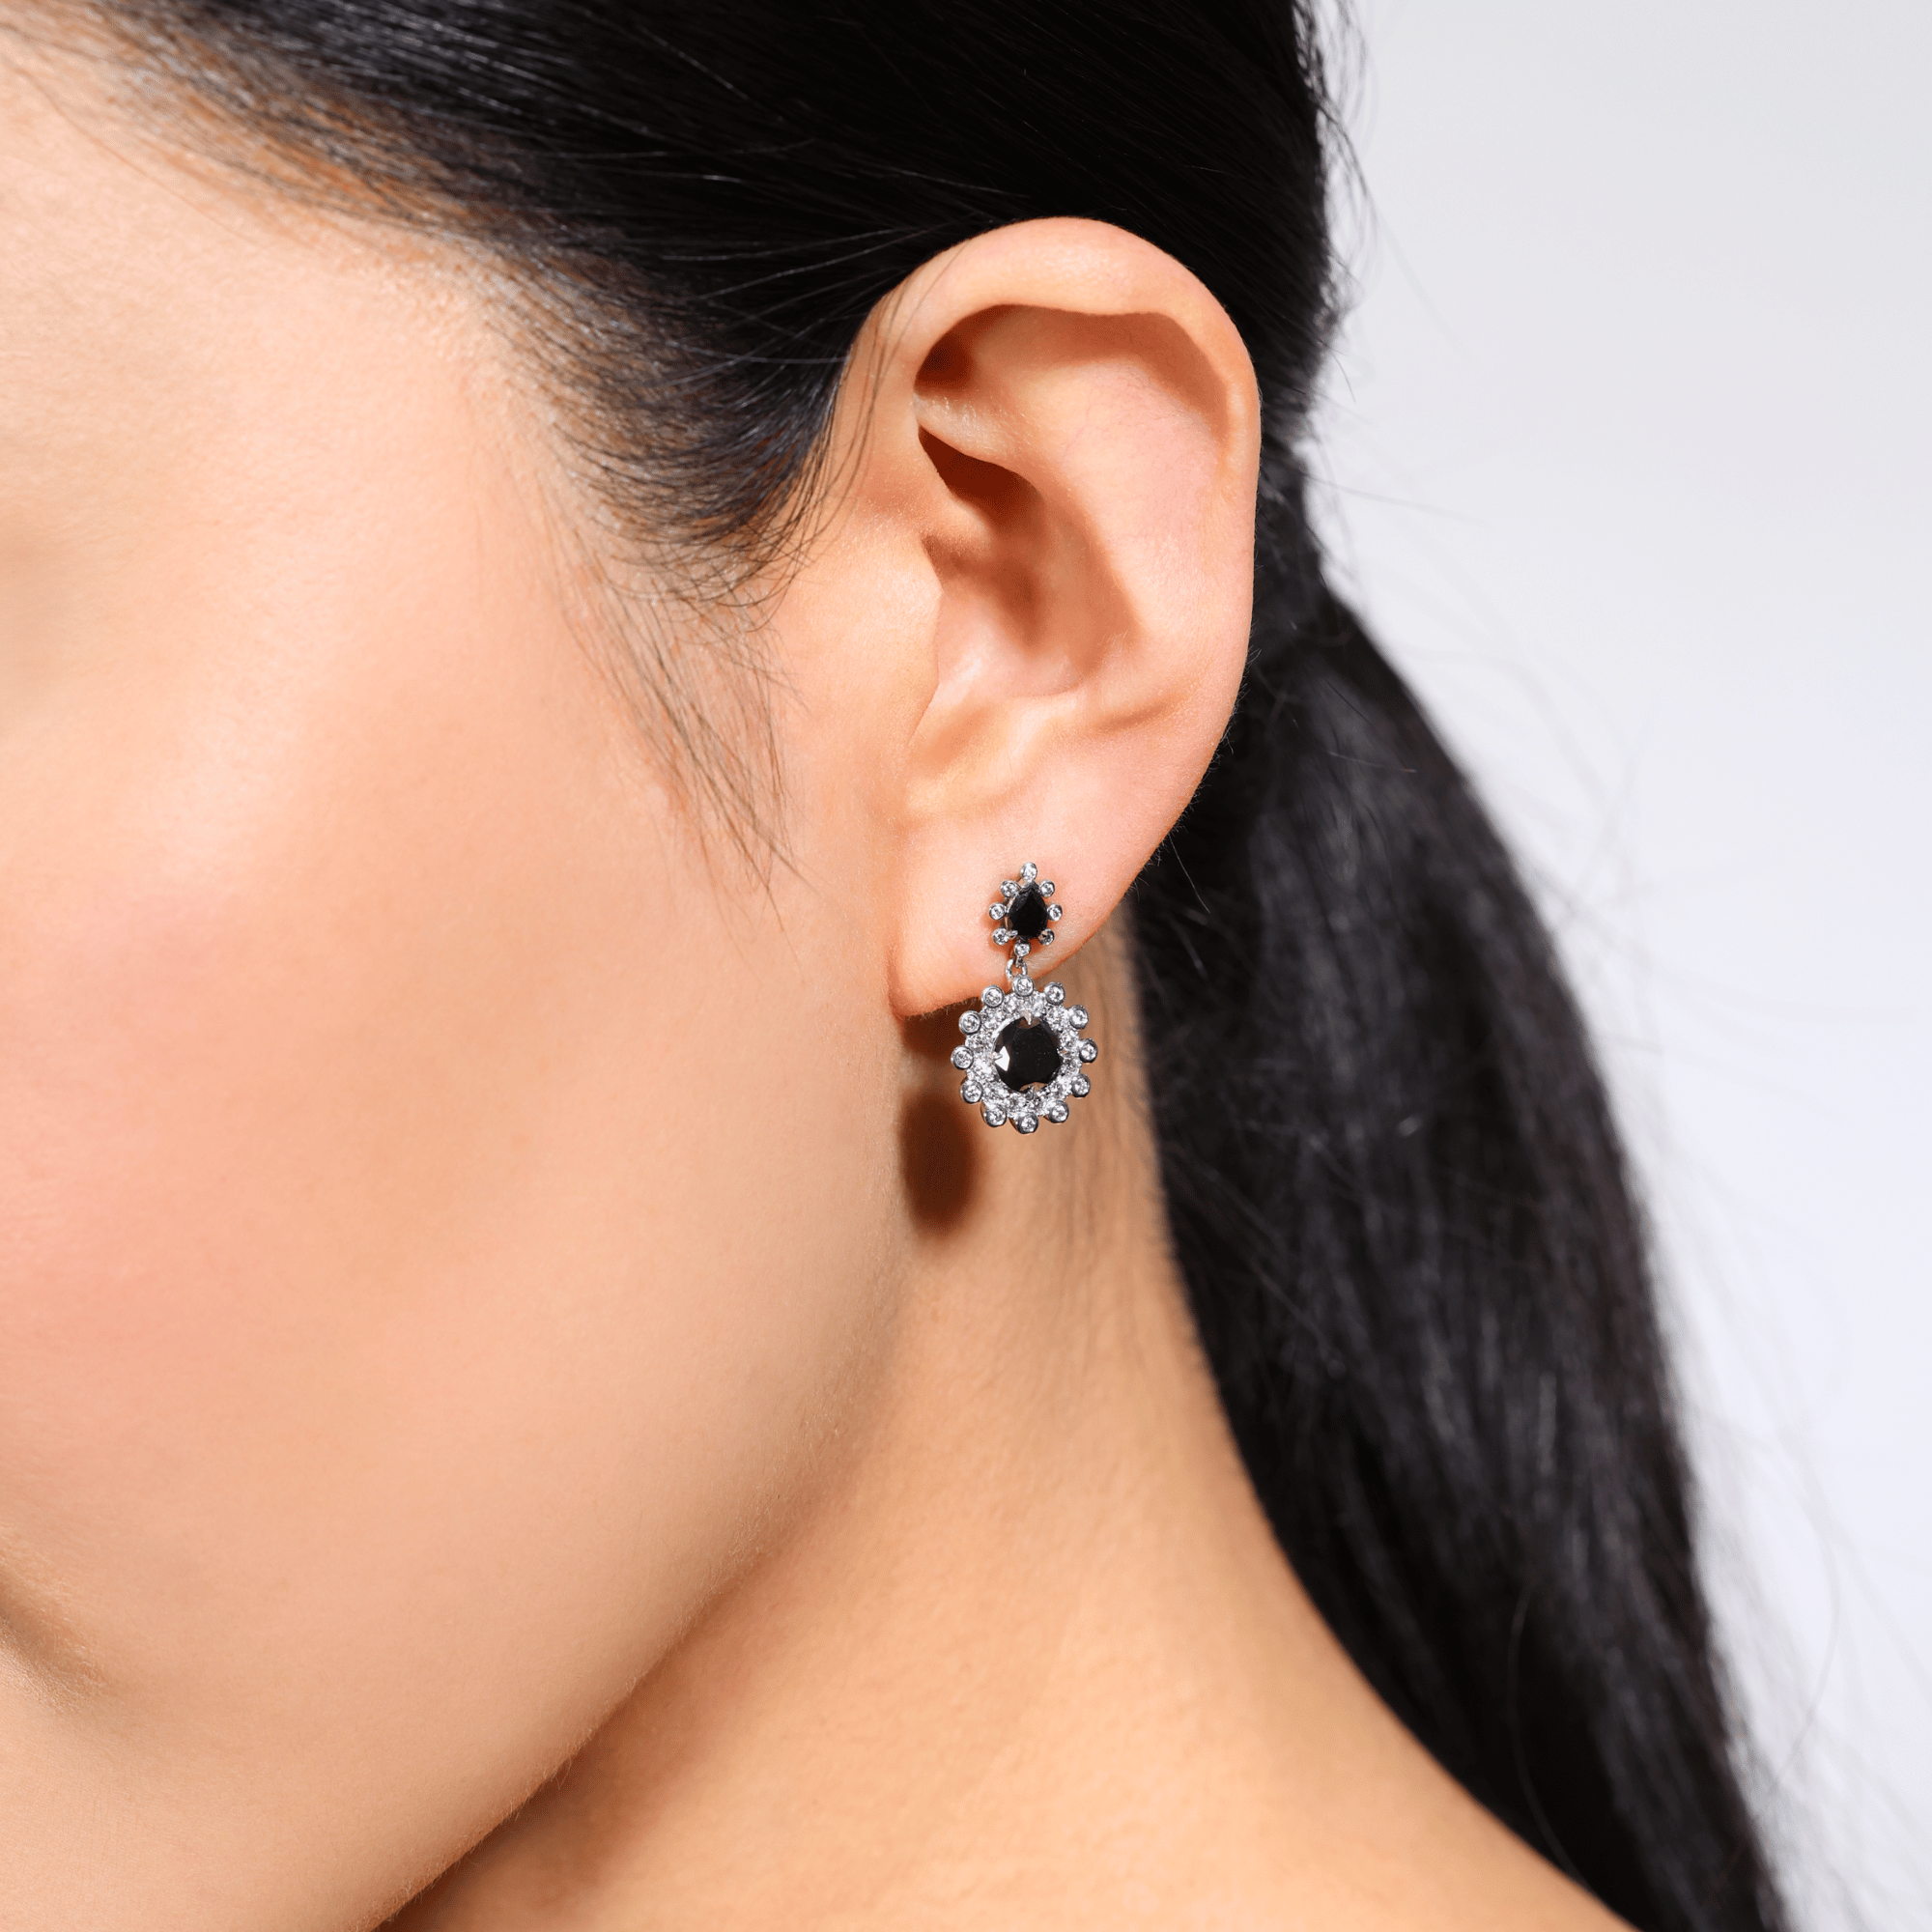 Black diamond and white diamond drop earrings